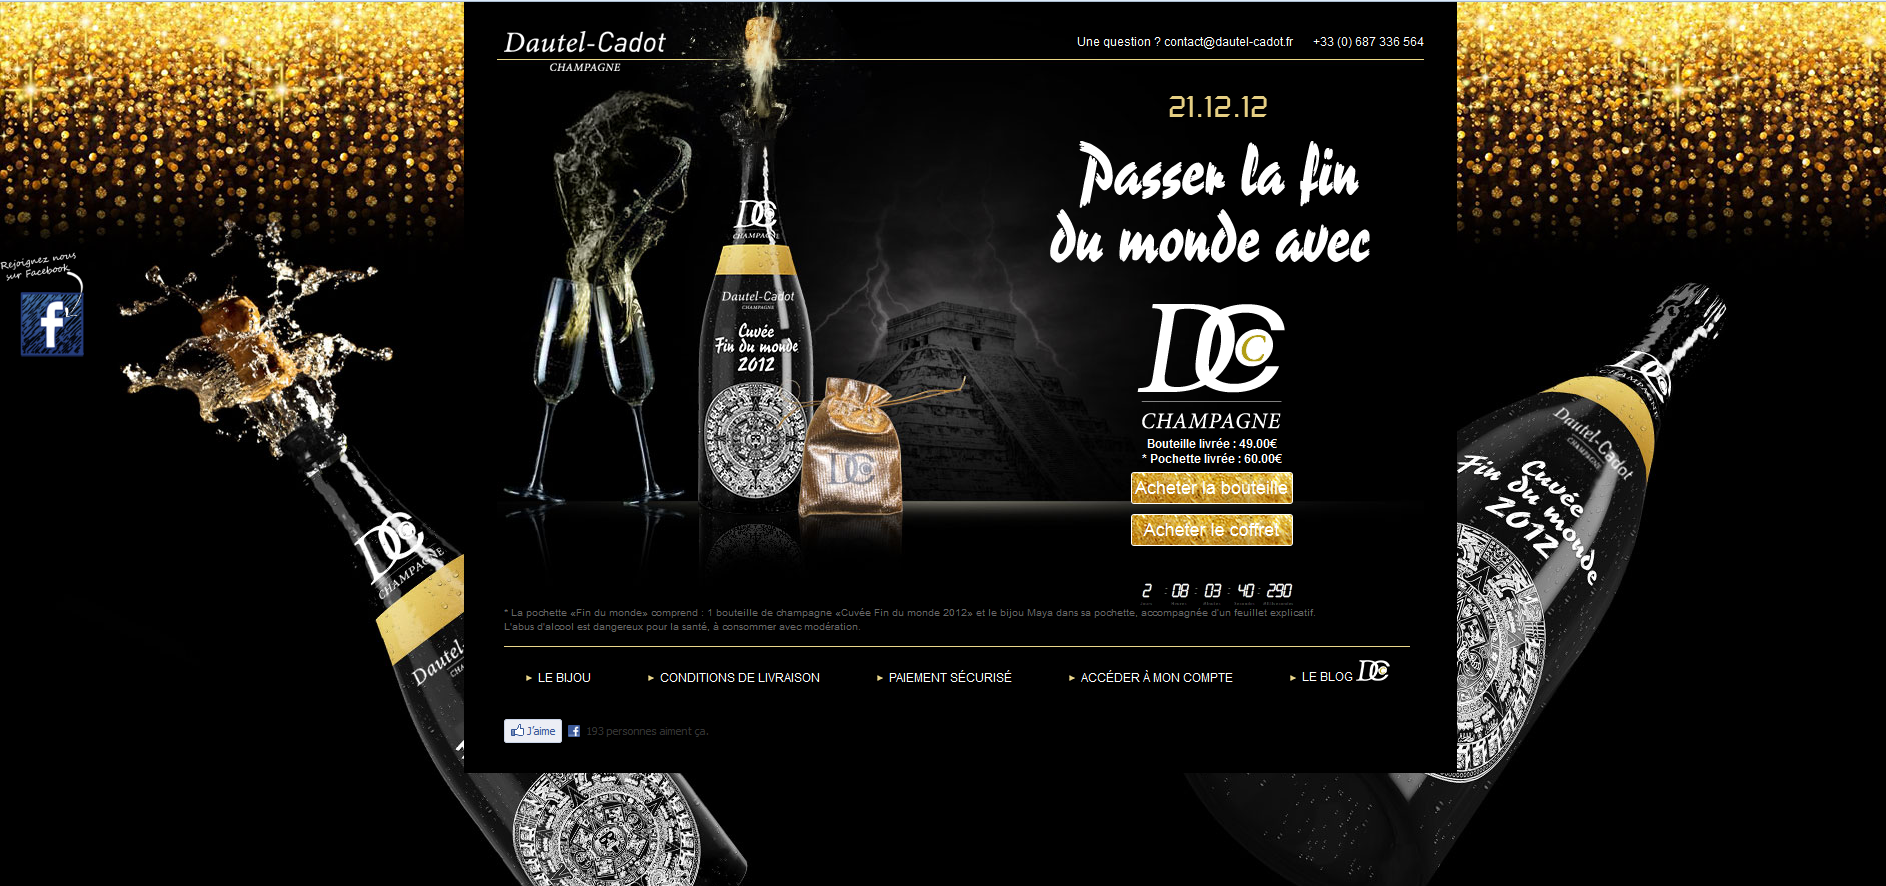 Dautel_cadot_champagne_fin_du_monde